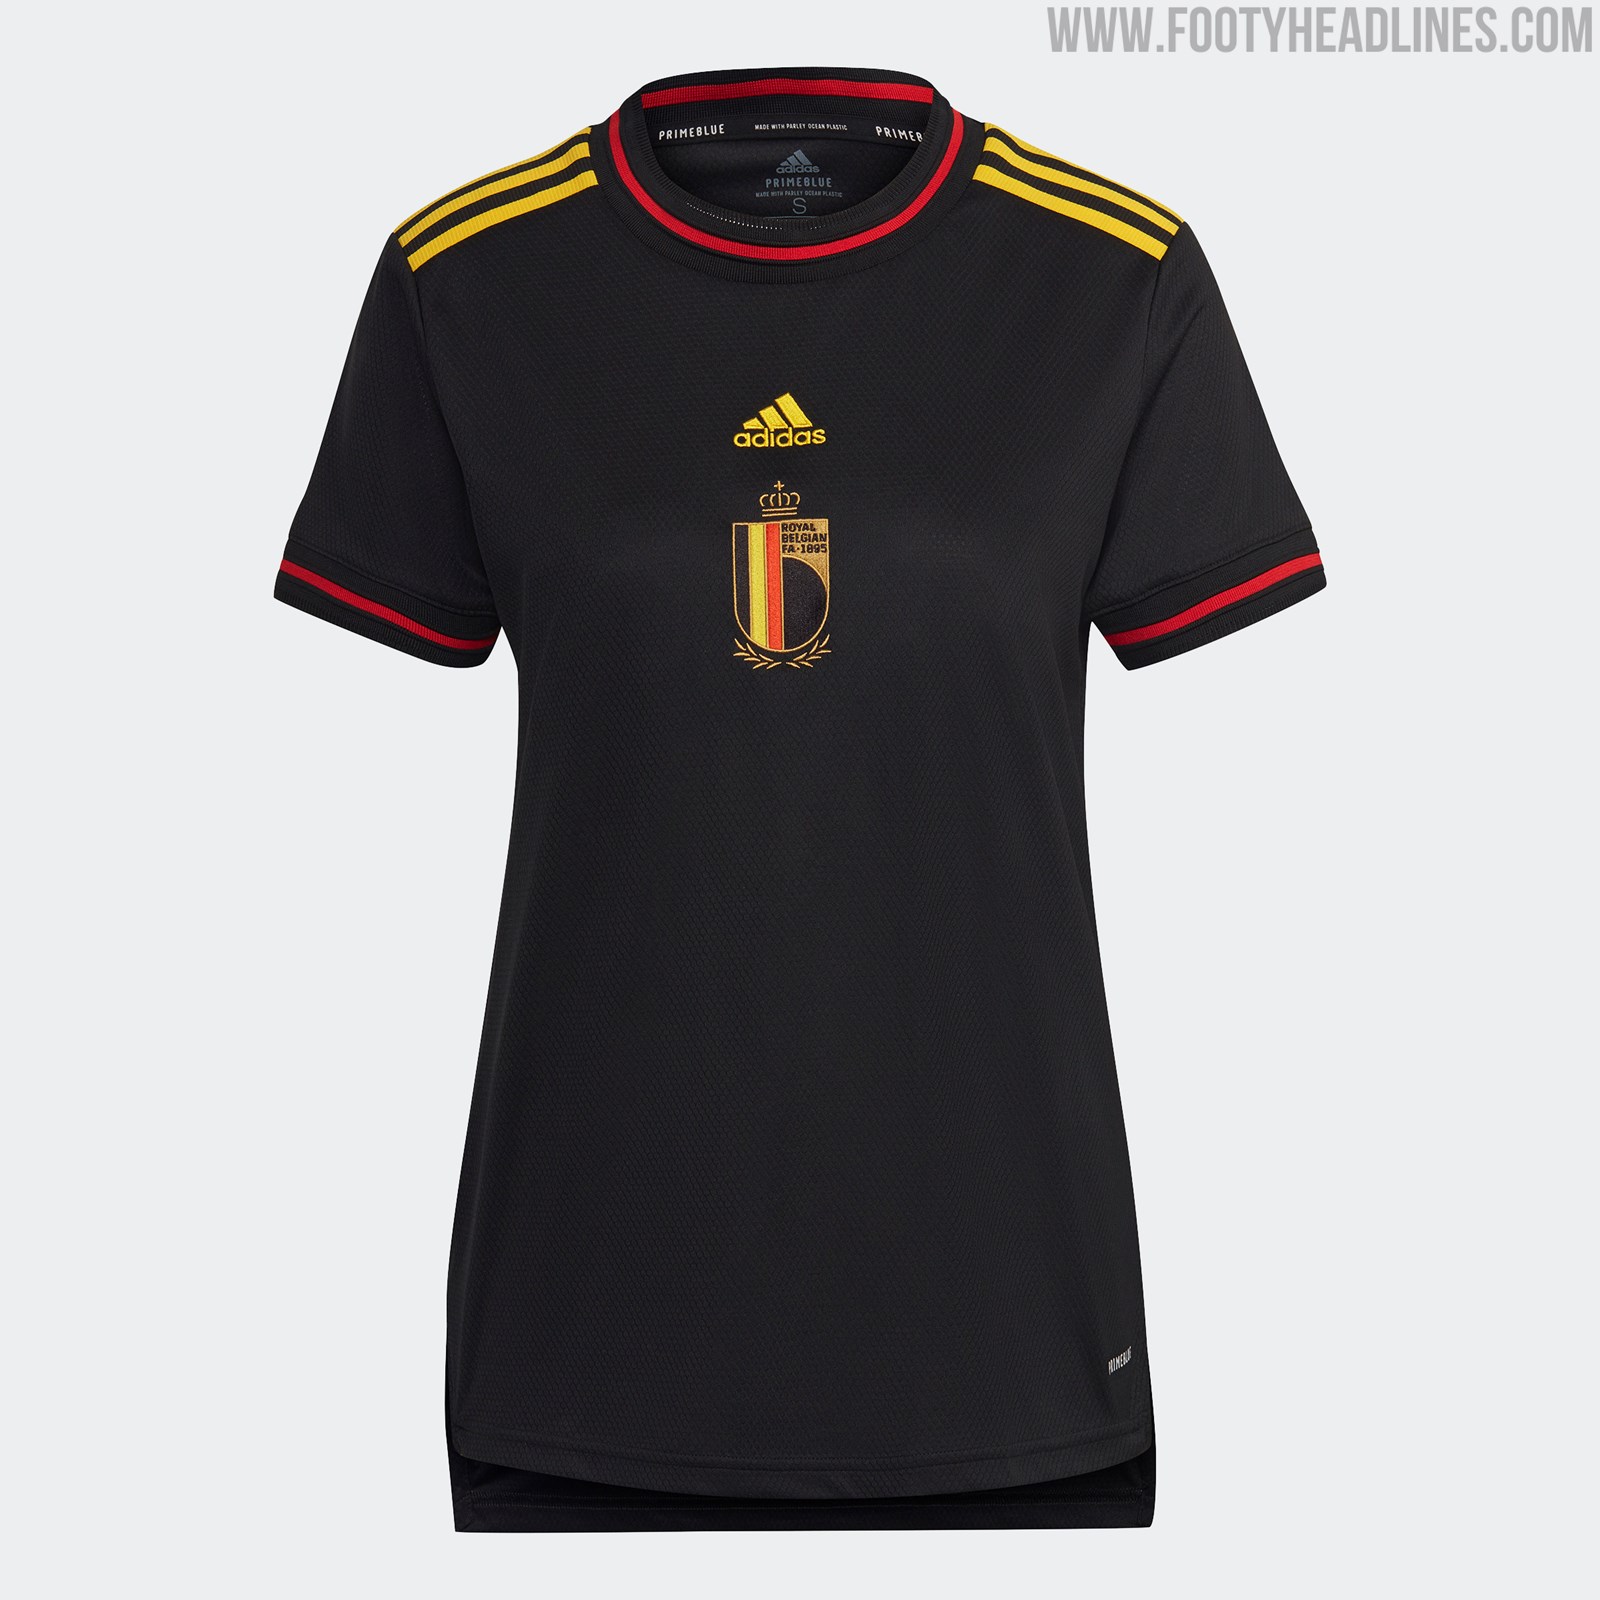 Belgium 2022 World Cup Home & Away Kits Released - Footy Headlines